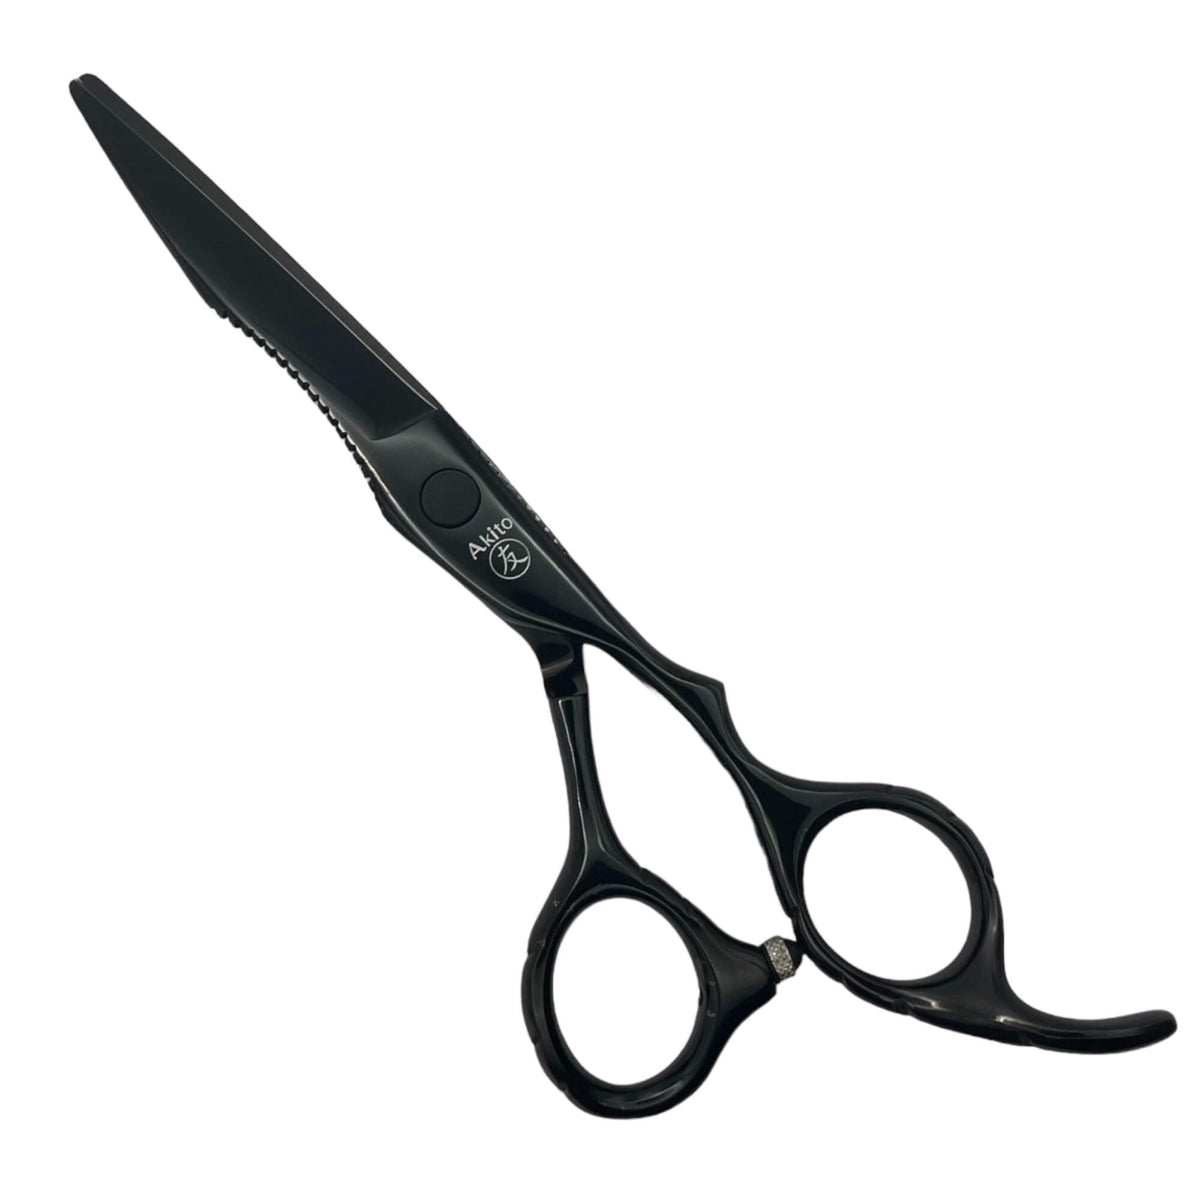 X-5 black barber scissors on side 